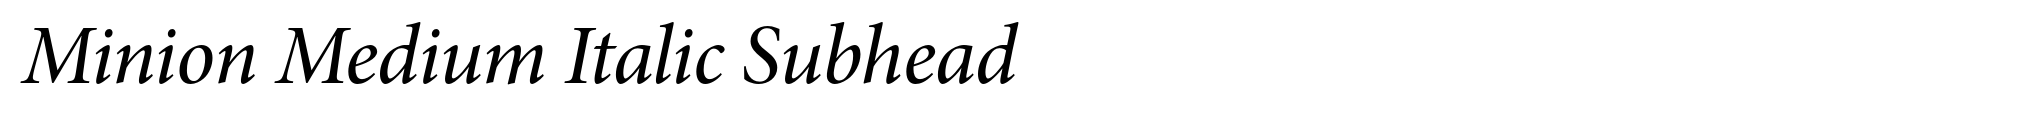 Minion Medium Italic Subhead image